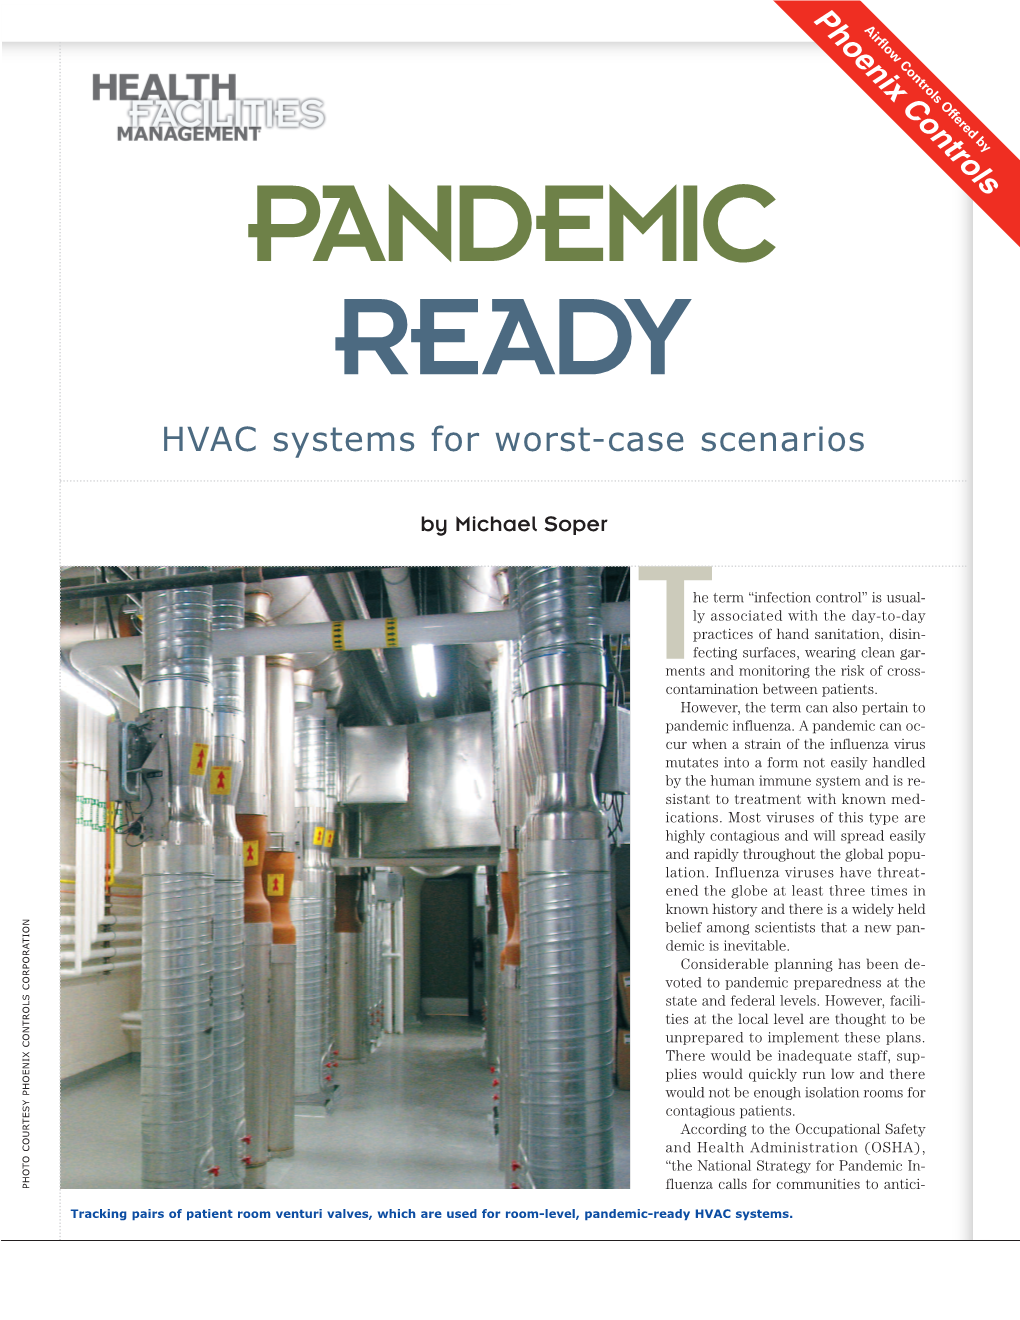 Pandemic-Ready HVAC Systems